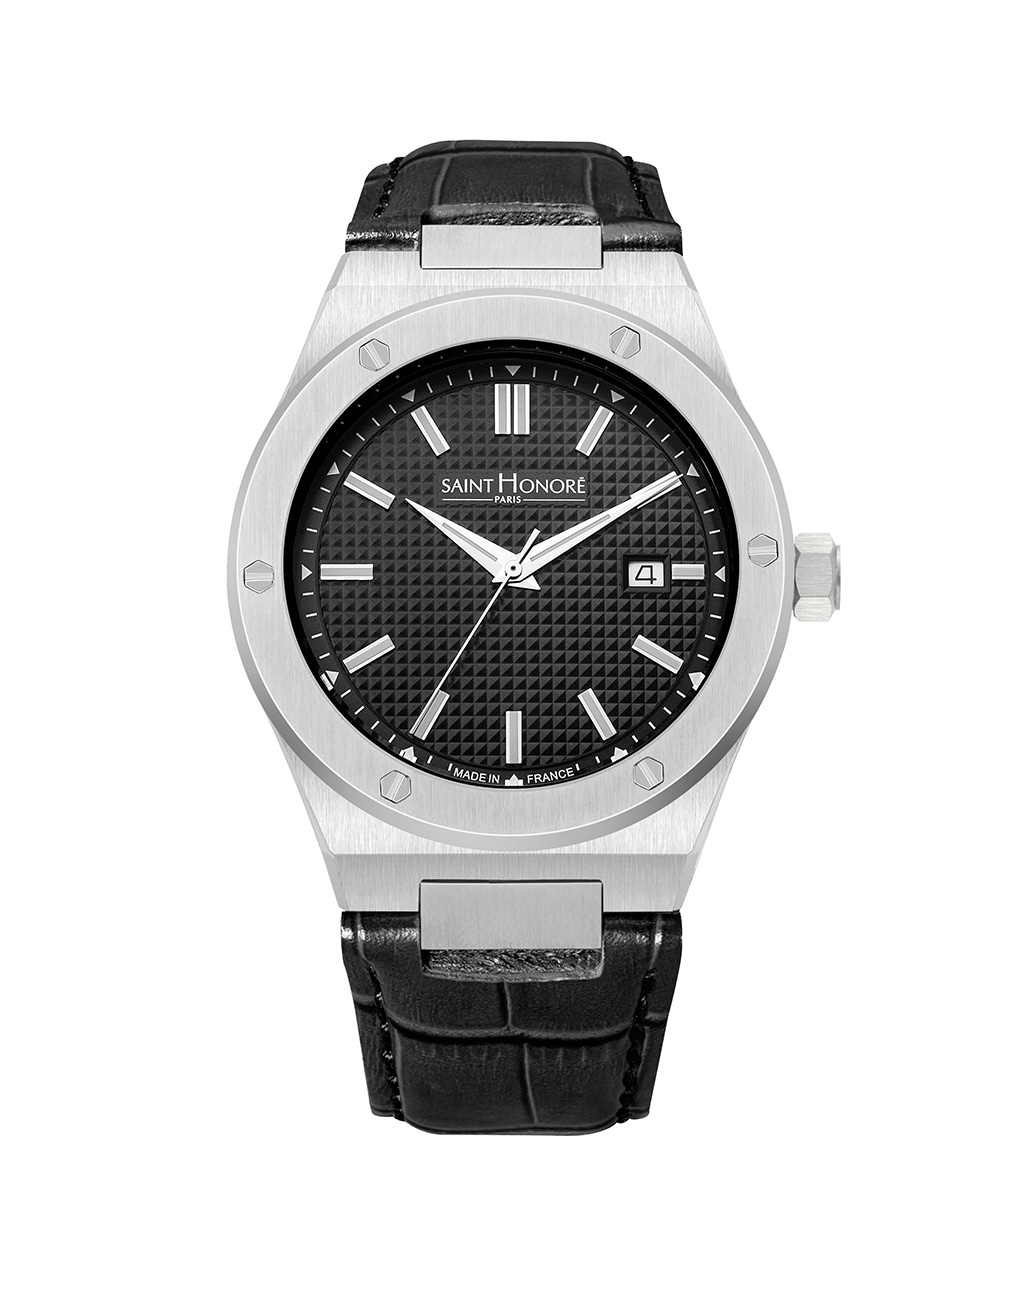 HAUSSMAN II Men's watch - stainless steel, black dial, black leather strap